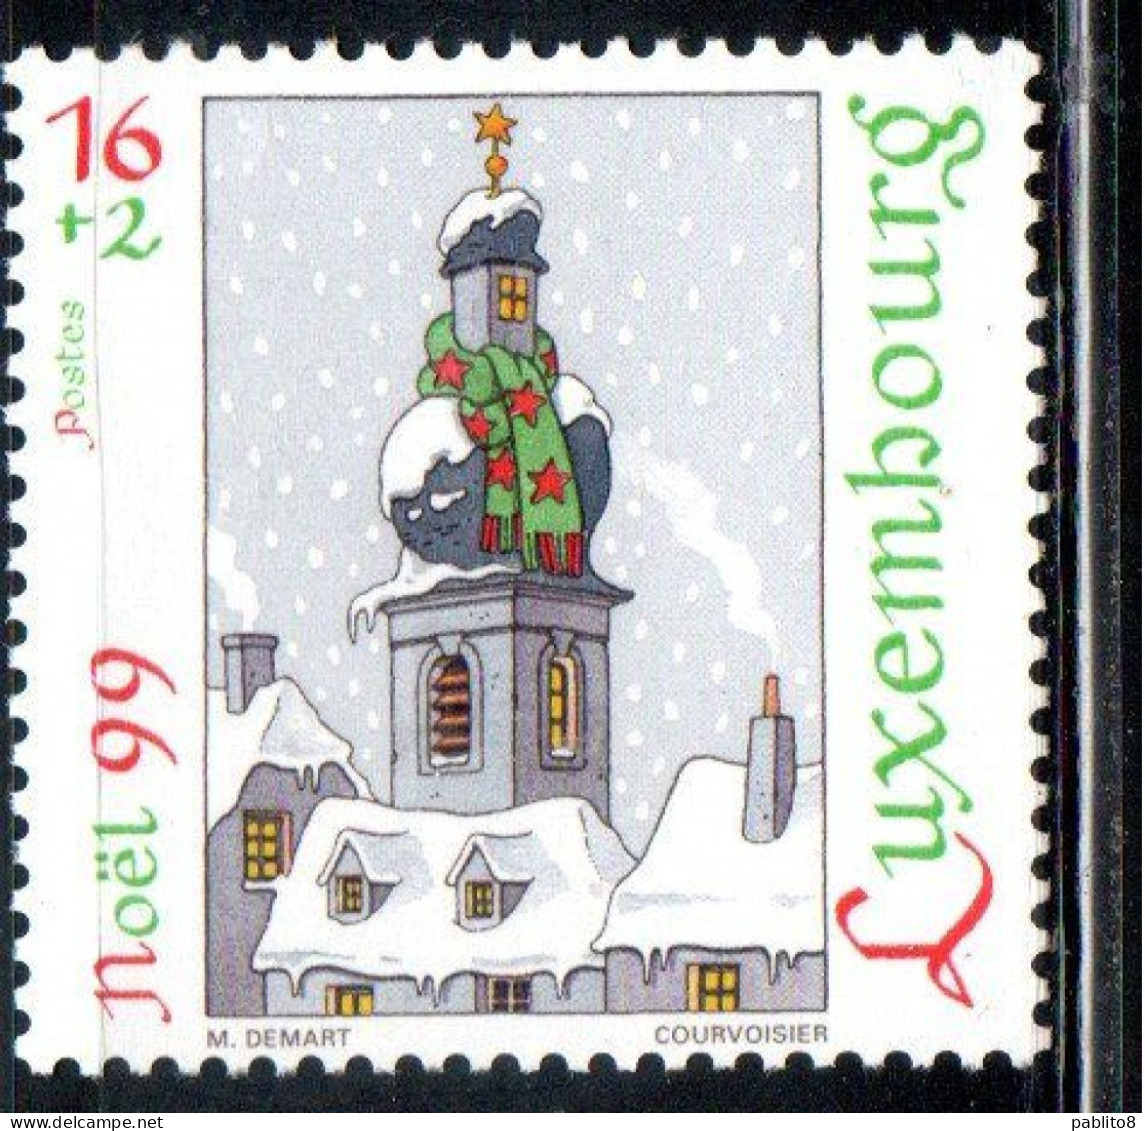 LUXEMBOURG LUSSEMBURGO 1999 CHRISTMAS NATALE NOEL WEIHNACHTEN NAVIDAD 16 +2 MNH - Ungebraucht